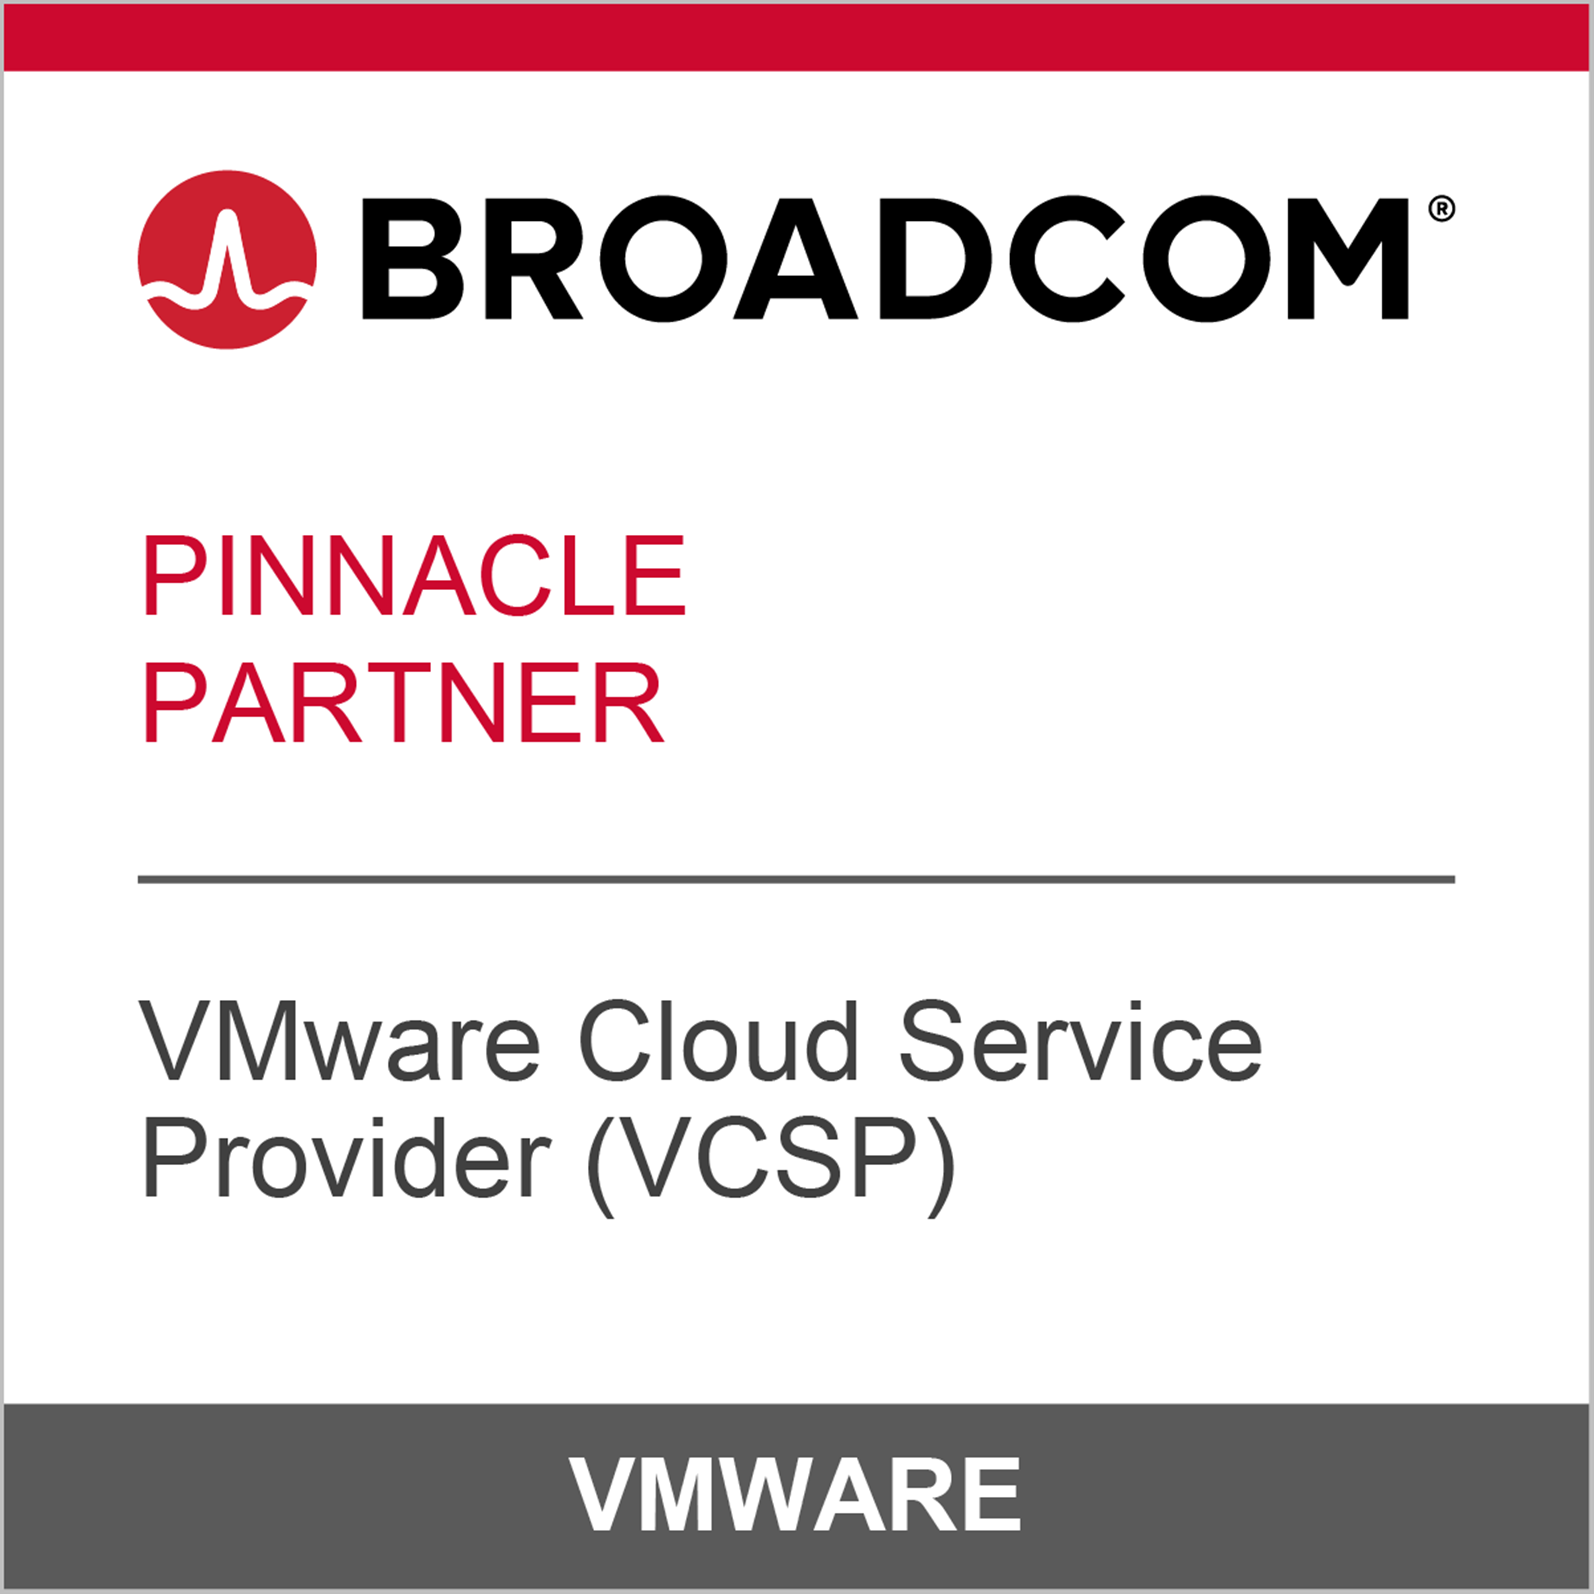 CITIC Telecom CPC Becomes New VMware Cloud Service Provider Pinnacle Tier Partner in the Broadcom Advantage Partner Program